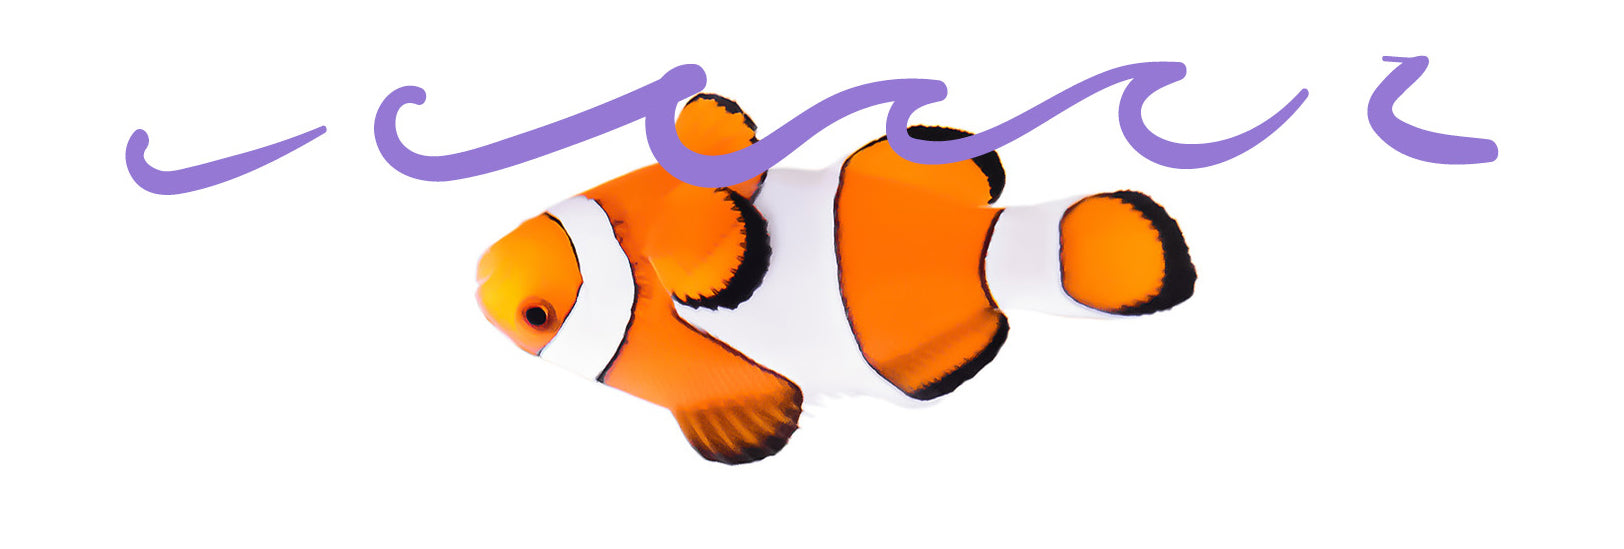 clown fish floating upside down